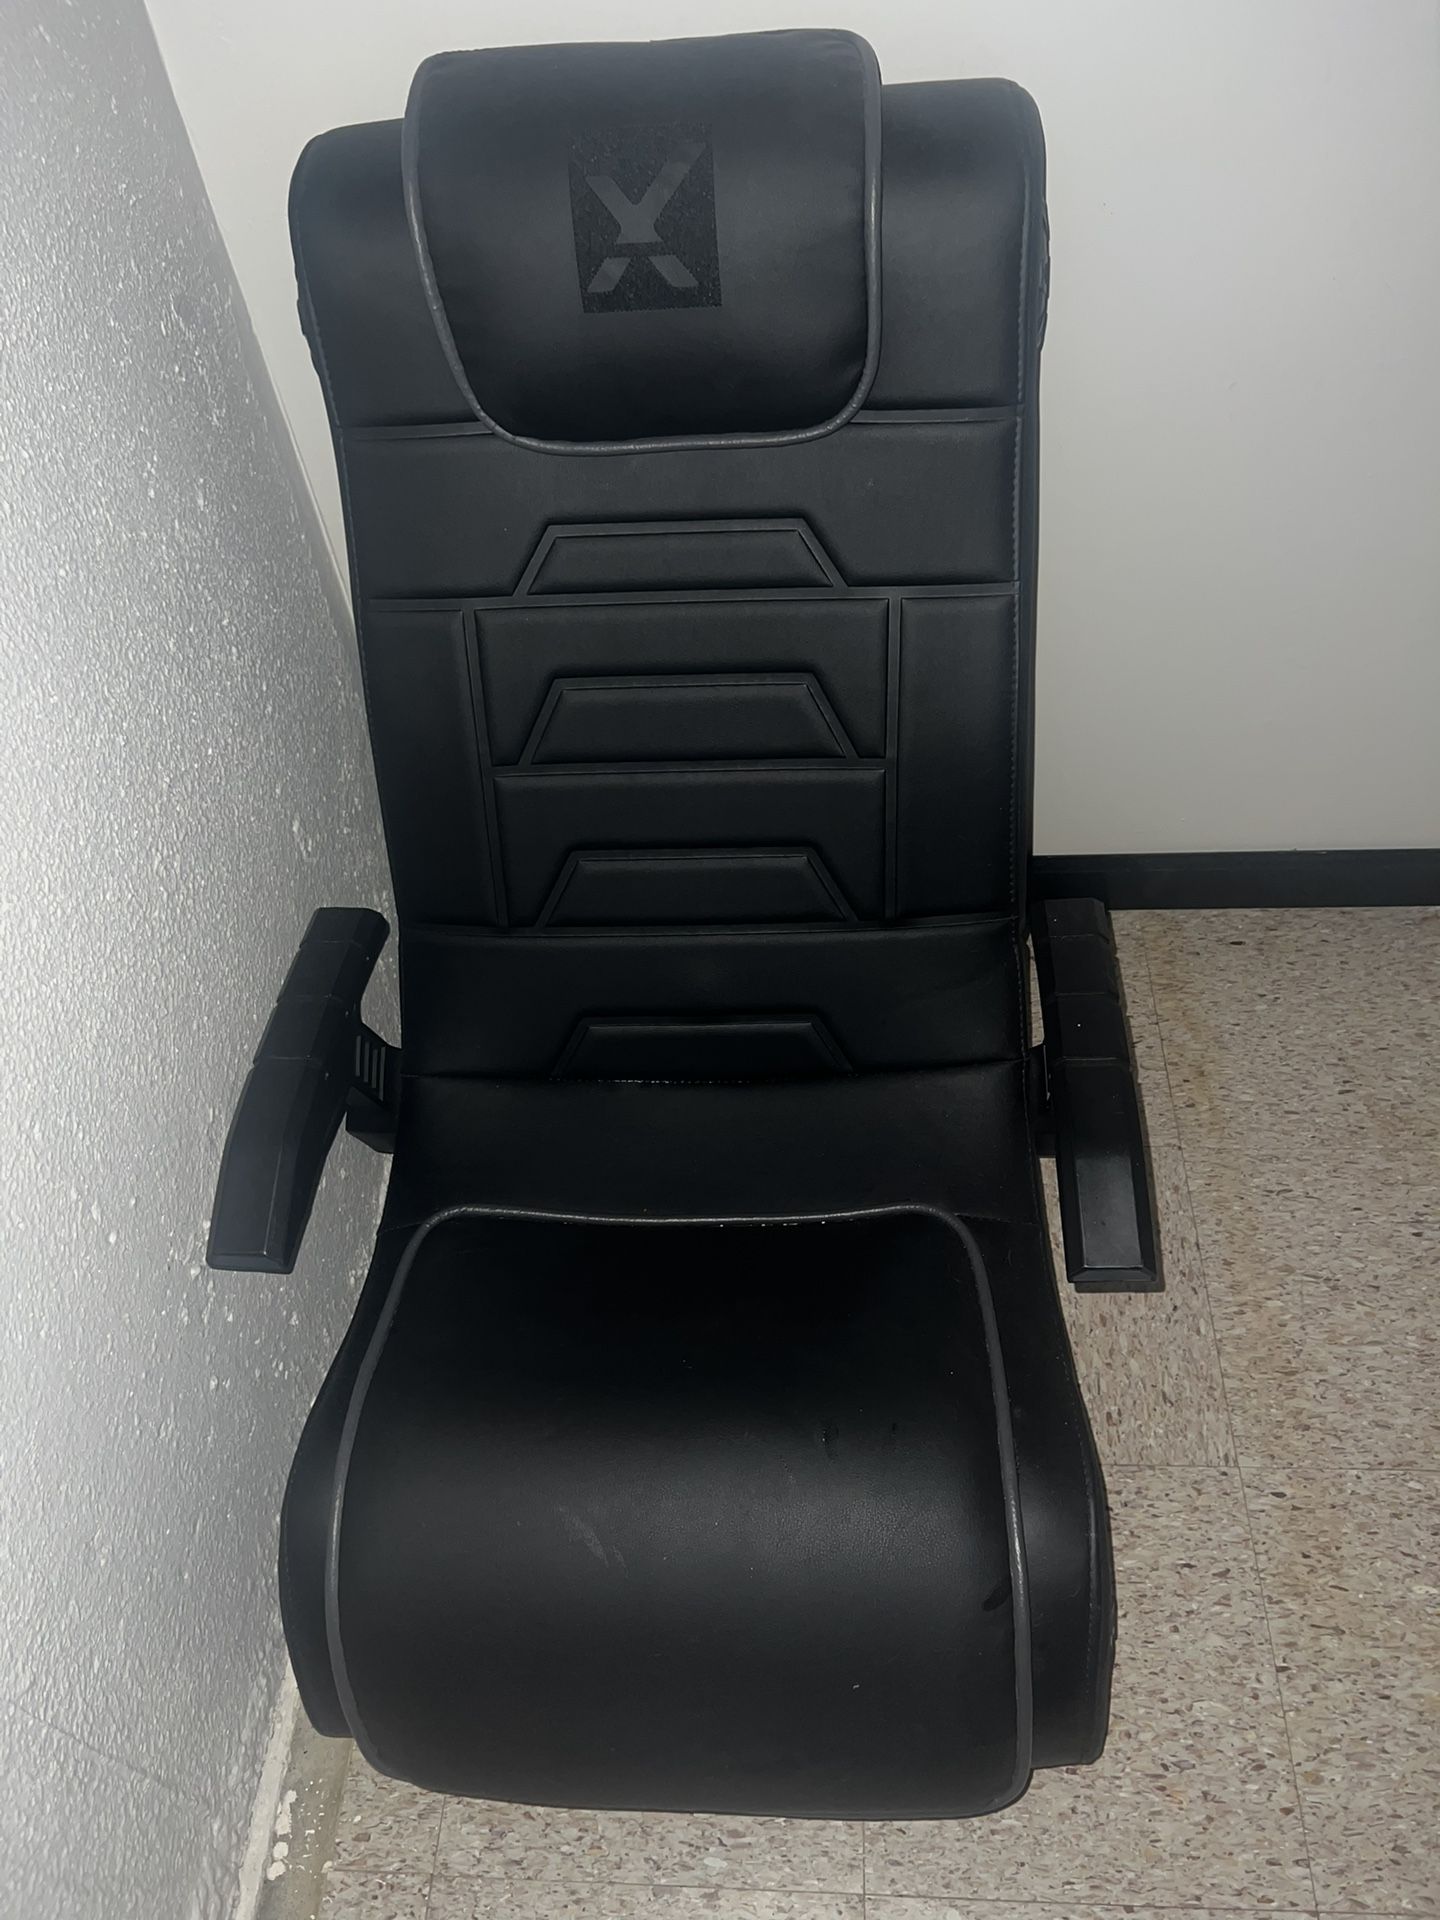 X Rocker Gaming Chair 